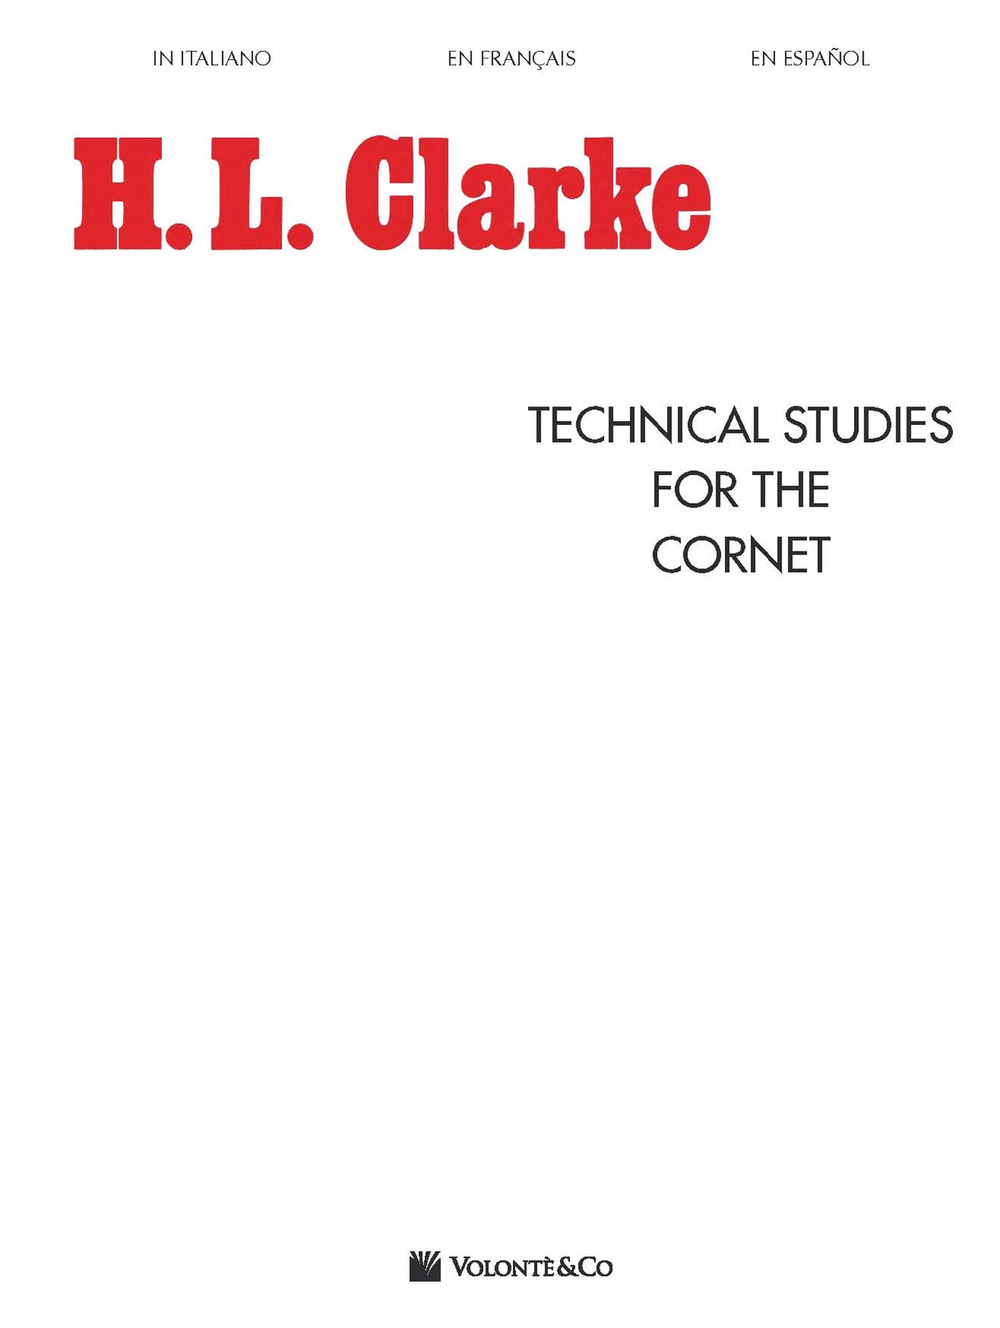 Technical studies for the cornet